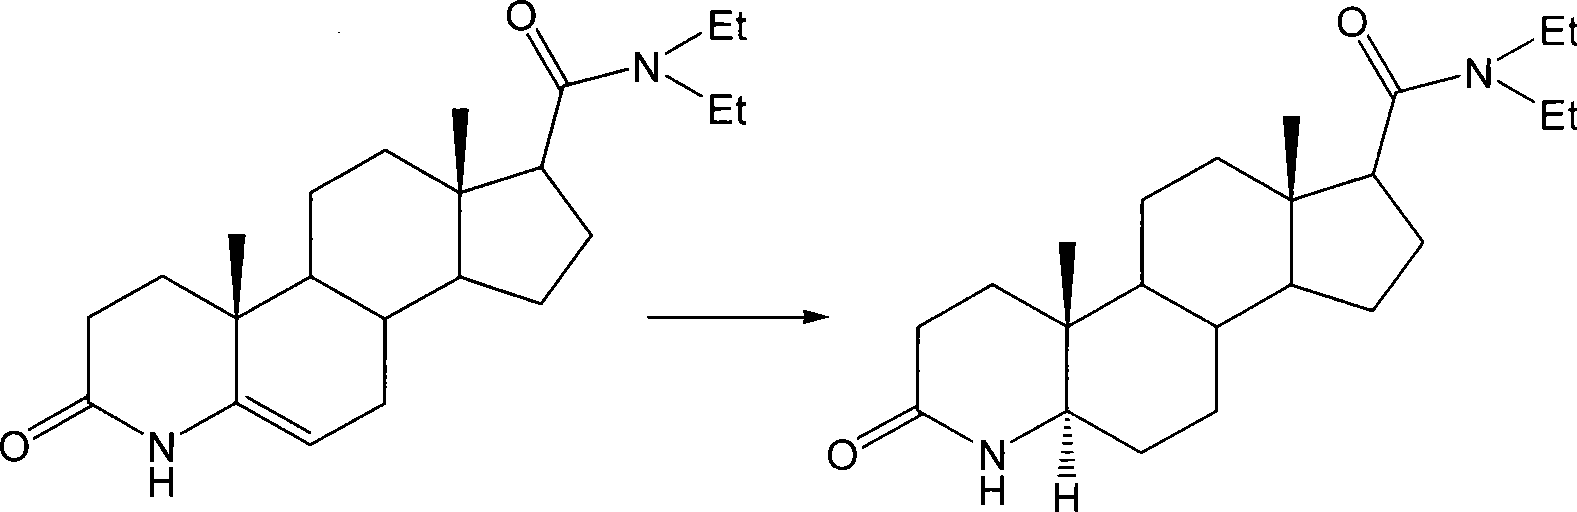 Method for preparing 3-carbonyl-4-aza-5alpha-androstanes